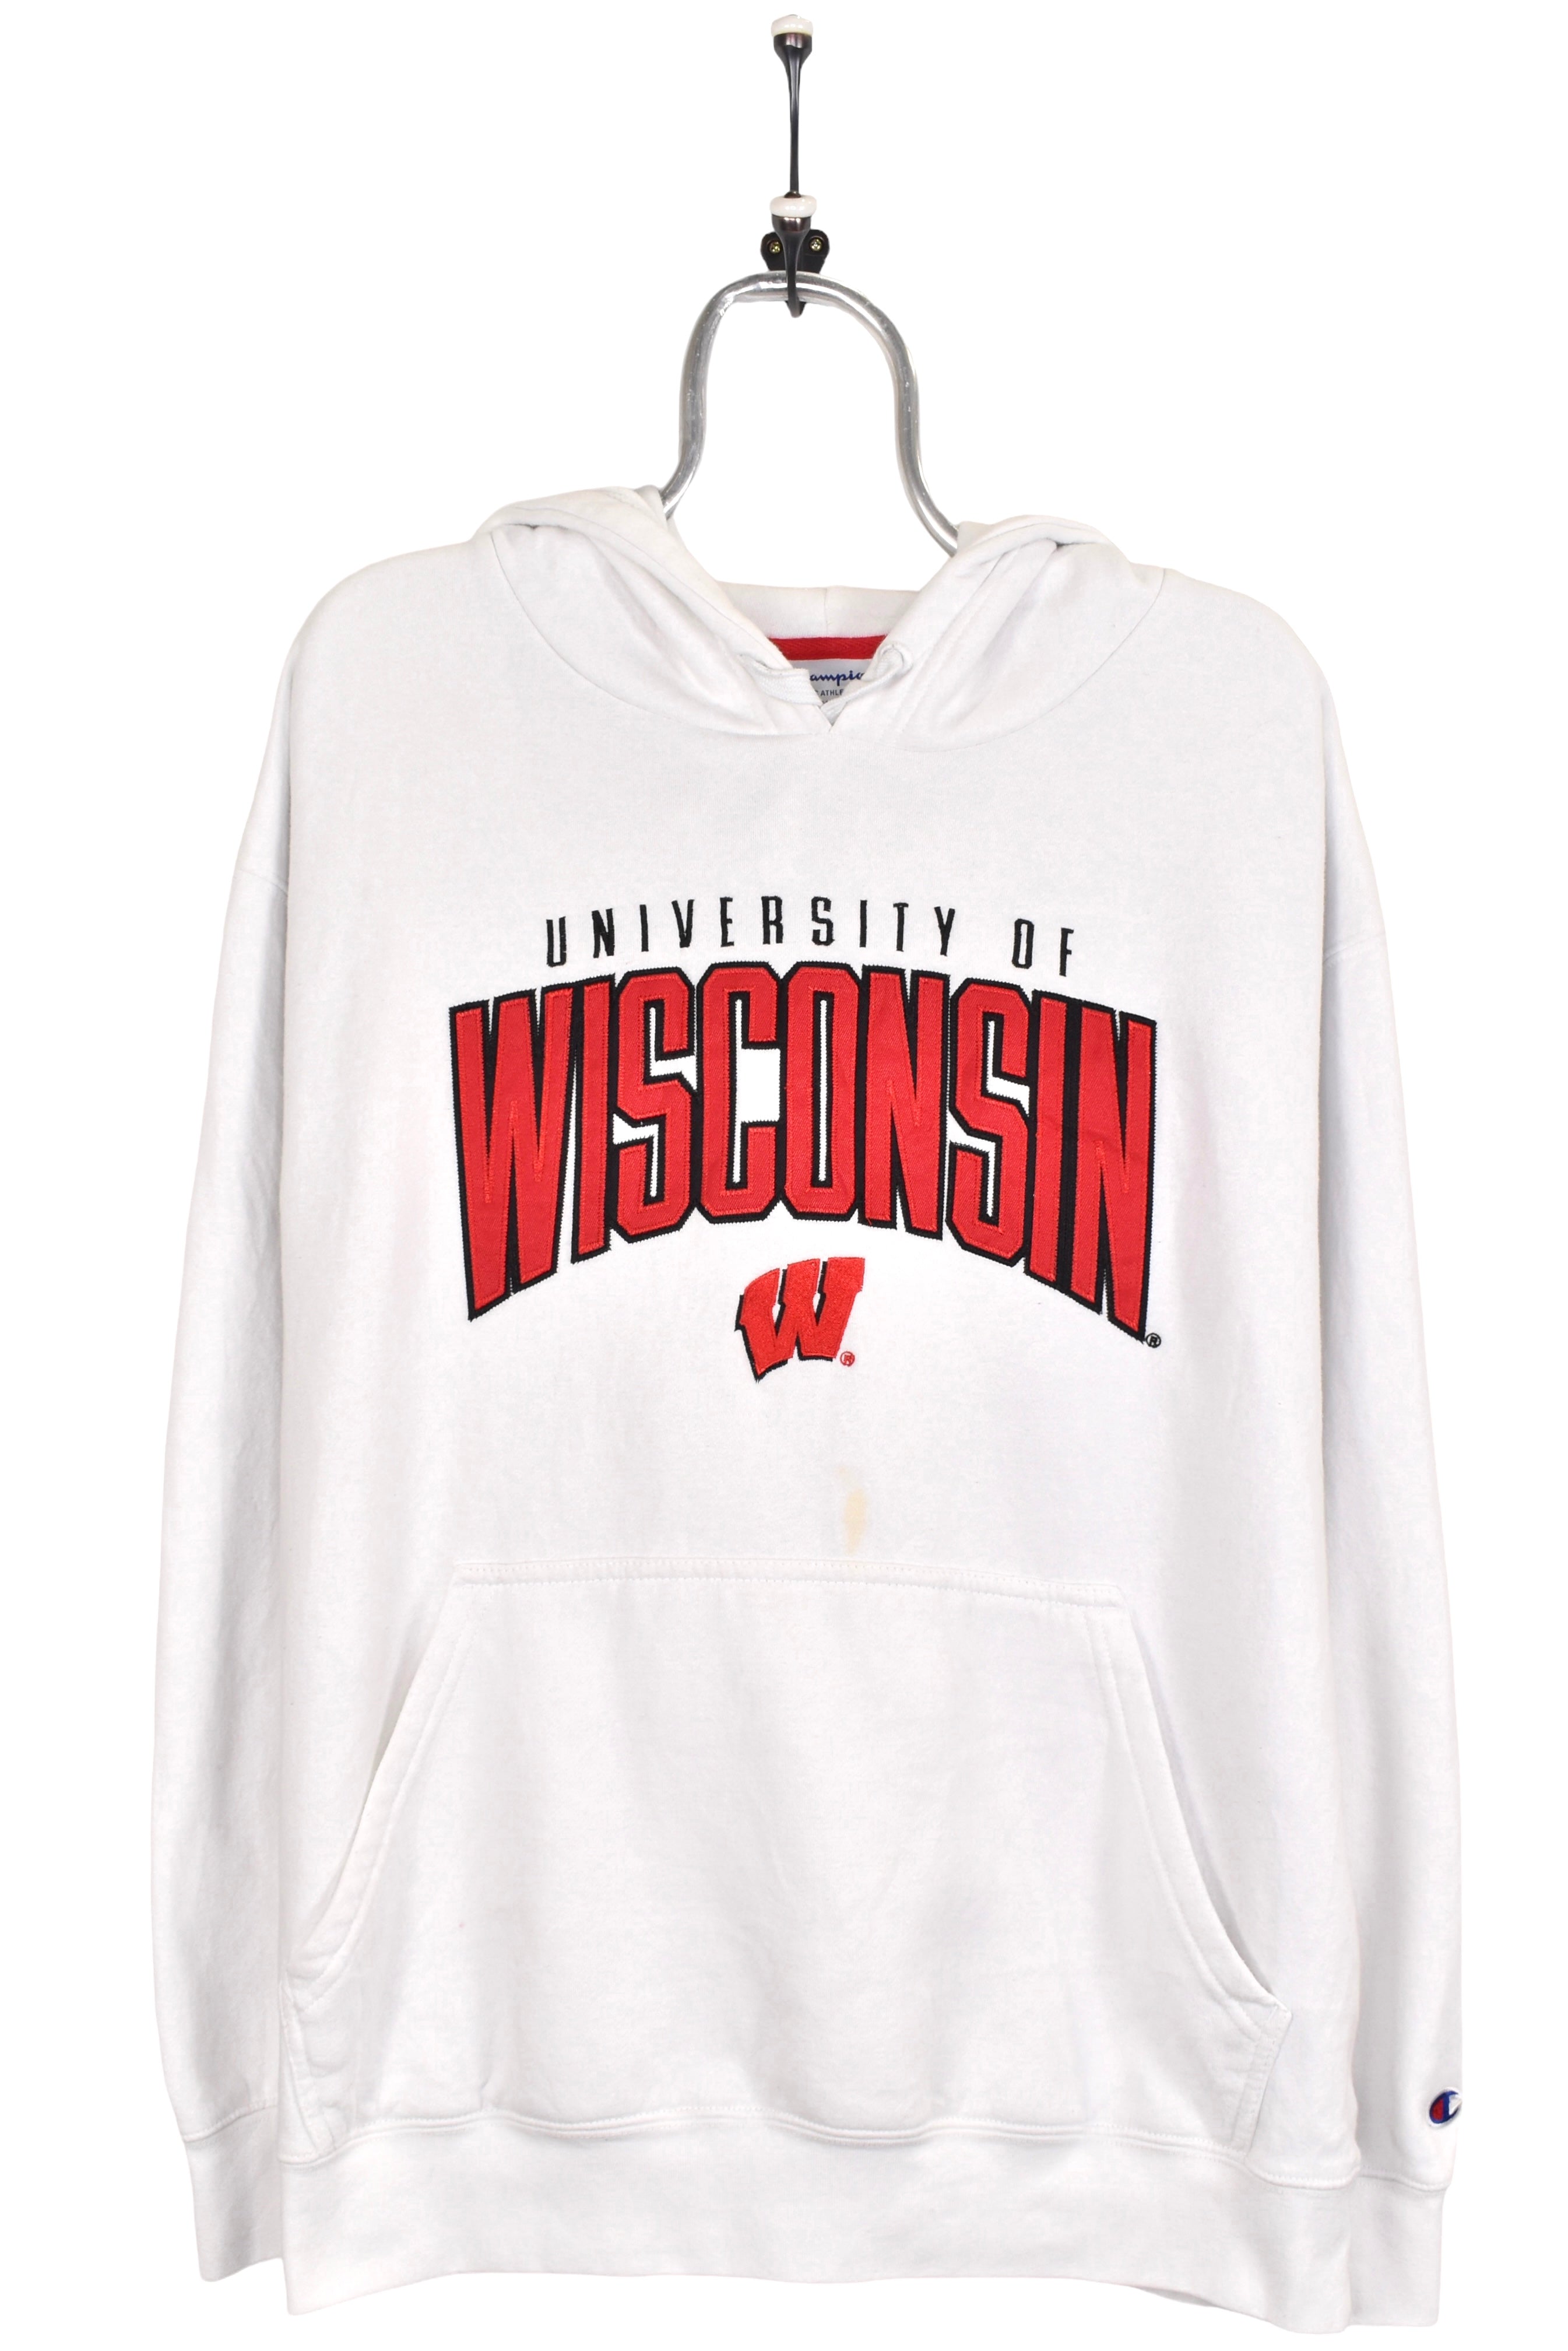 Modern University of Wisconsin hoodie, white embroidered sweatshirt - XL